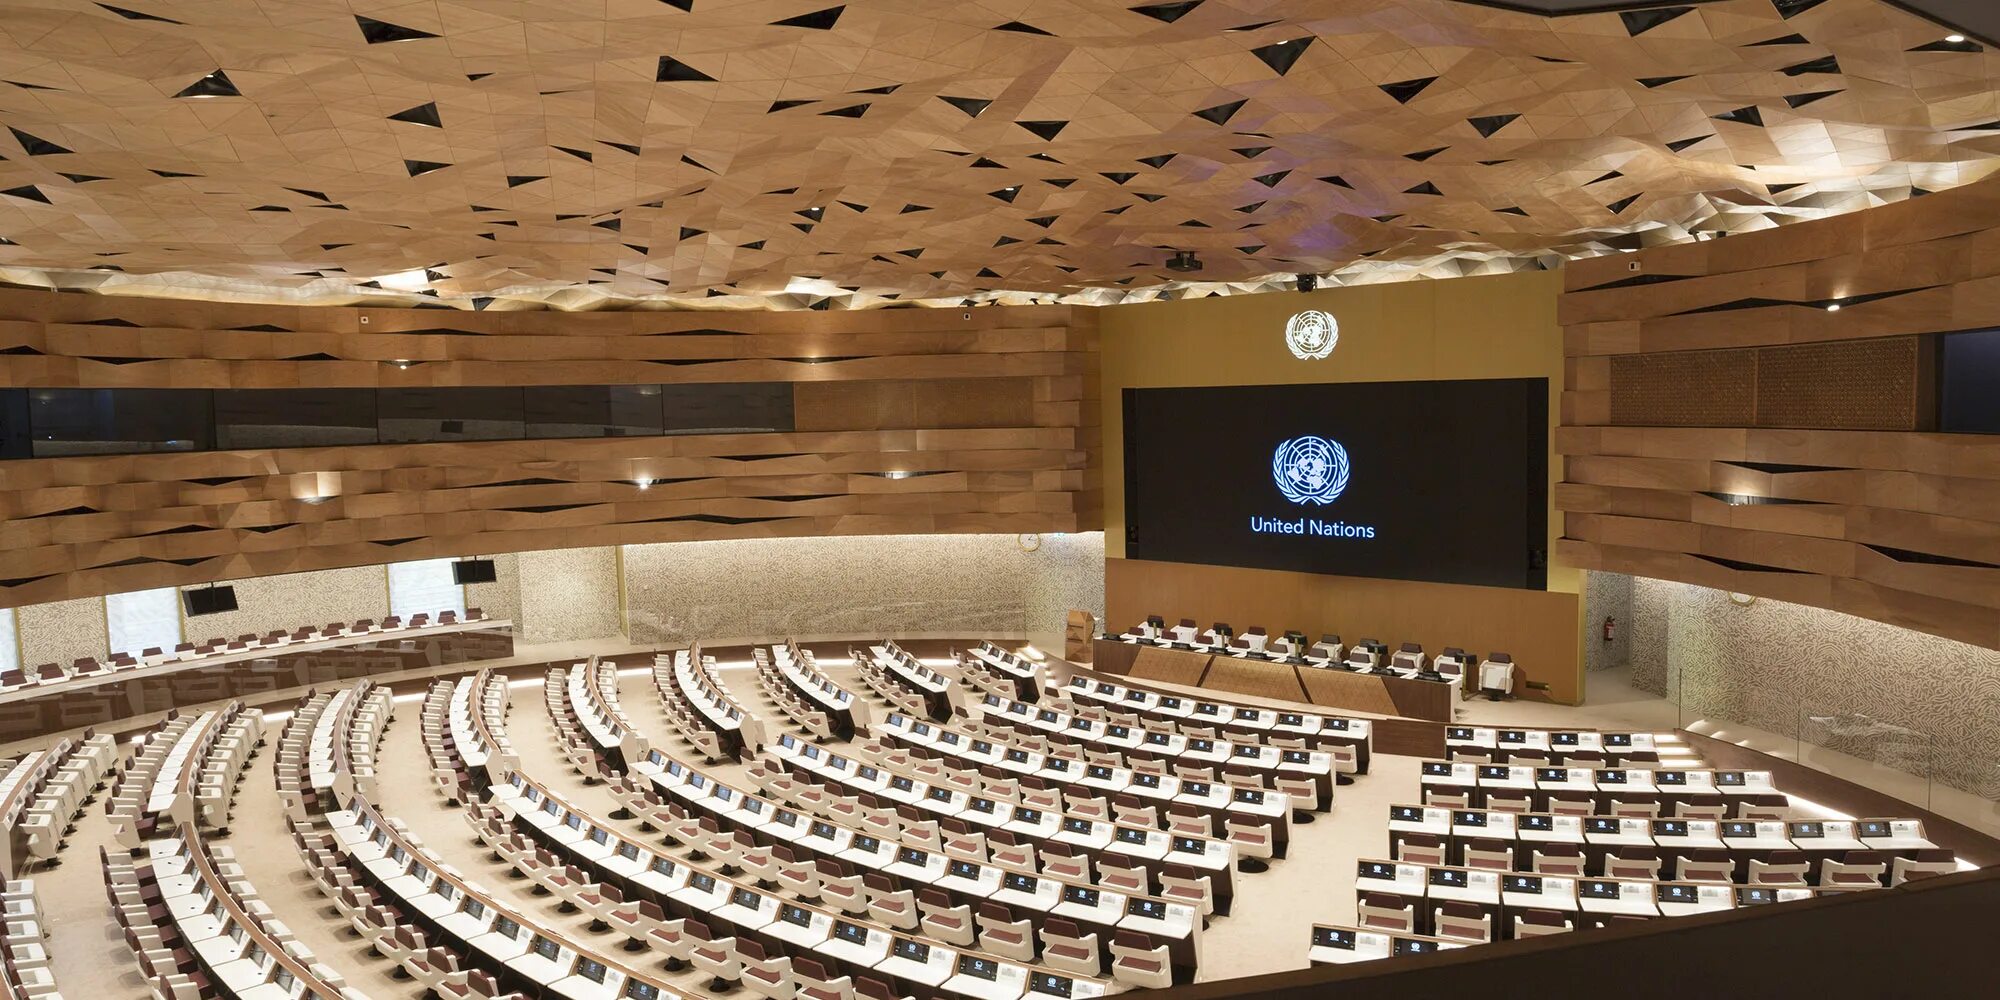 Штаб квартира ООН зал. Здание ООН внутри. Штаб ООН изнутри. Зал ООН В Женеве. Офис оон